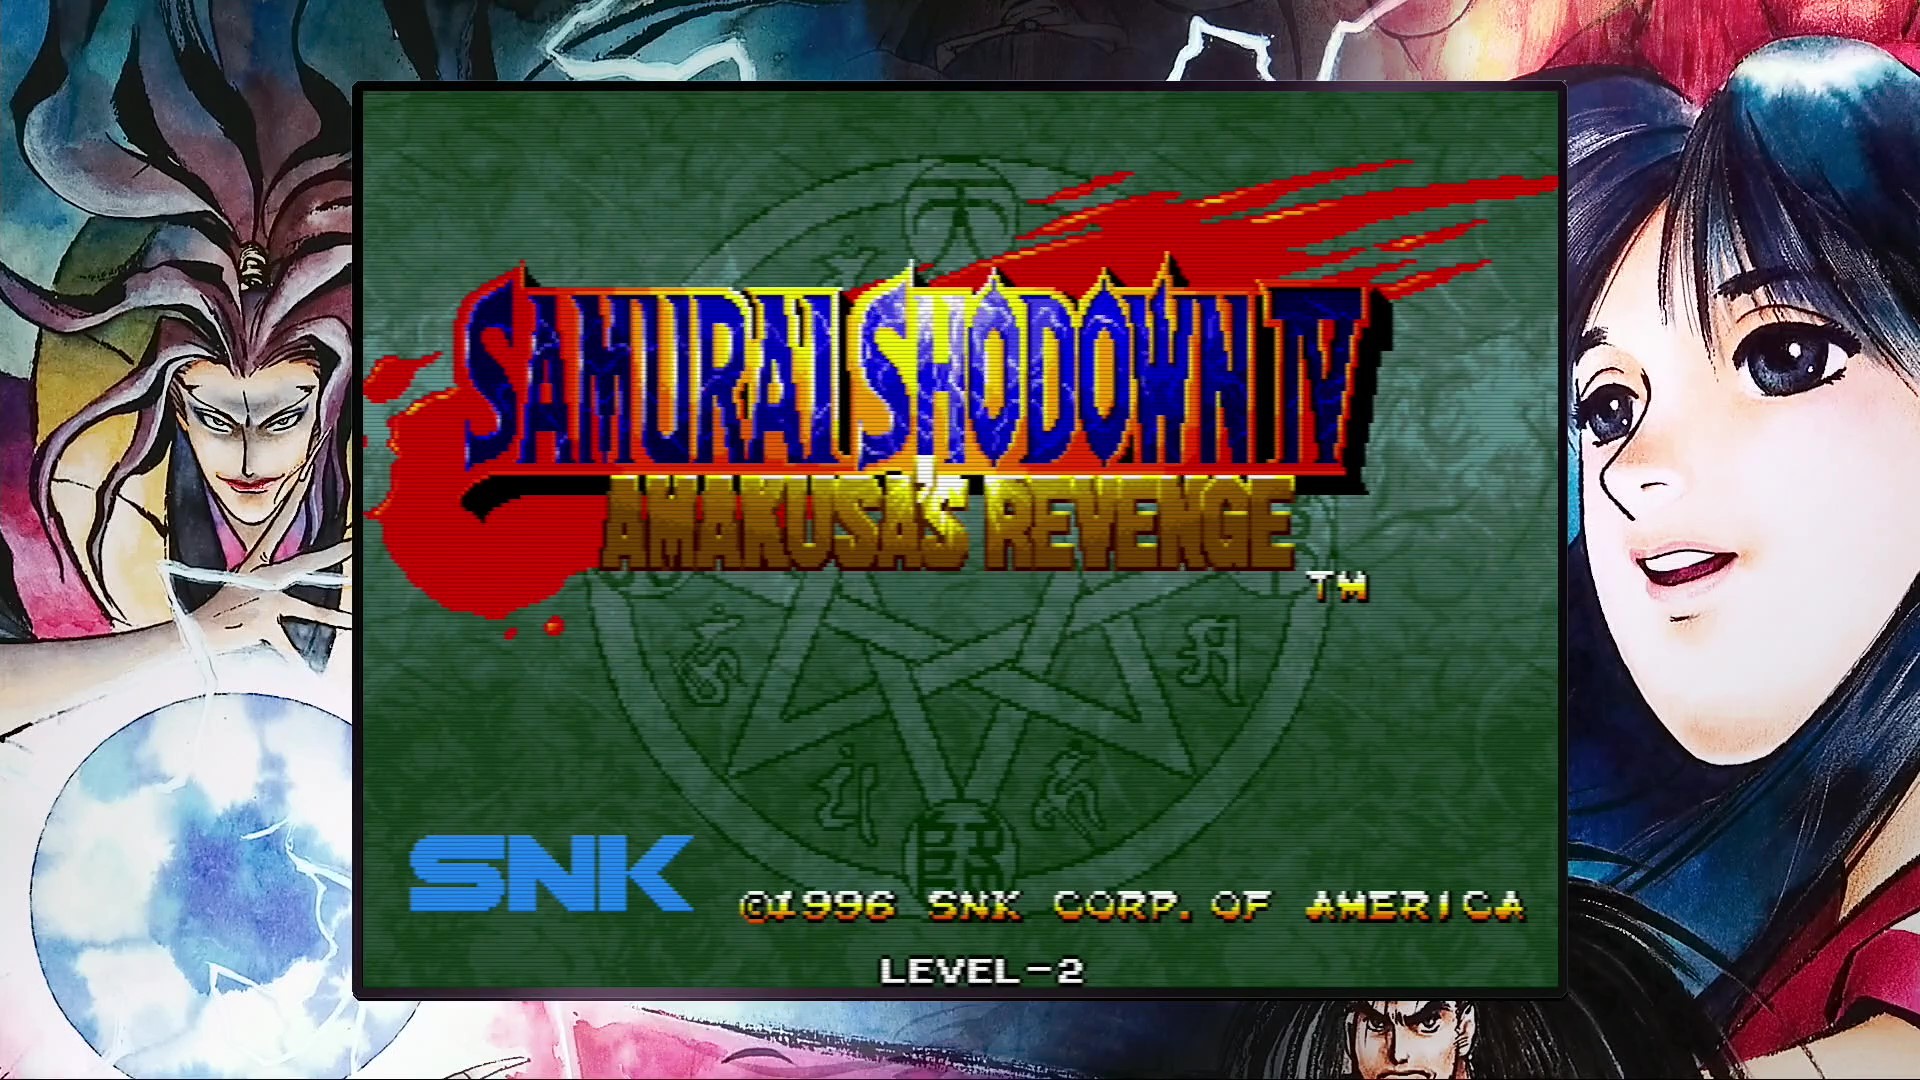 Samurai Shodown NeoGeo Collection Steam CD Key